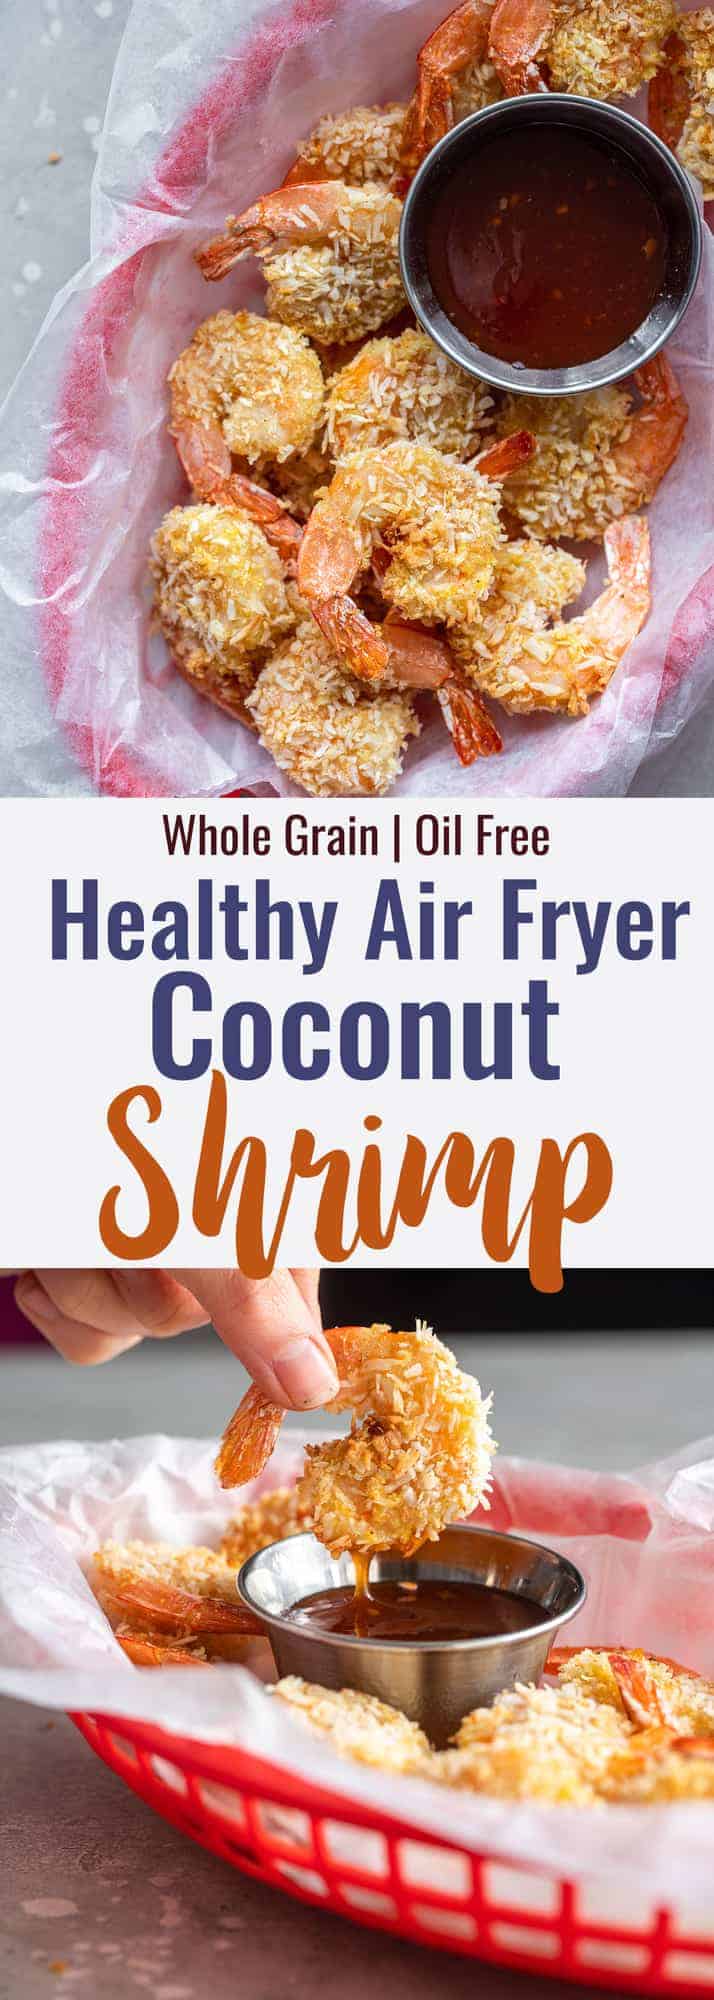 Air Fryer Coconut Shrimp collage image